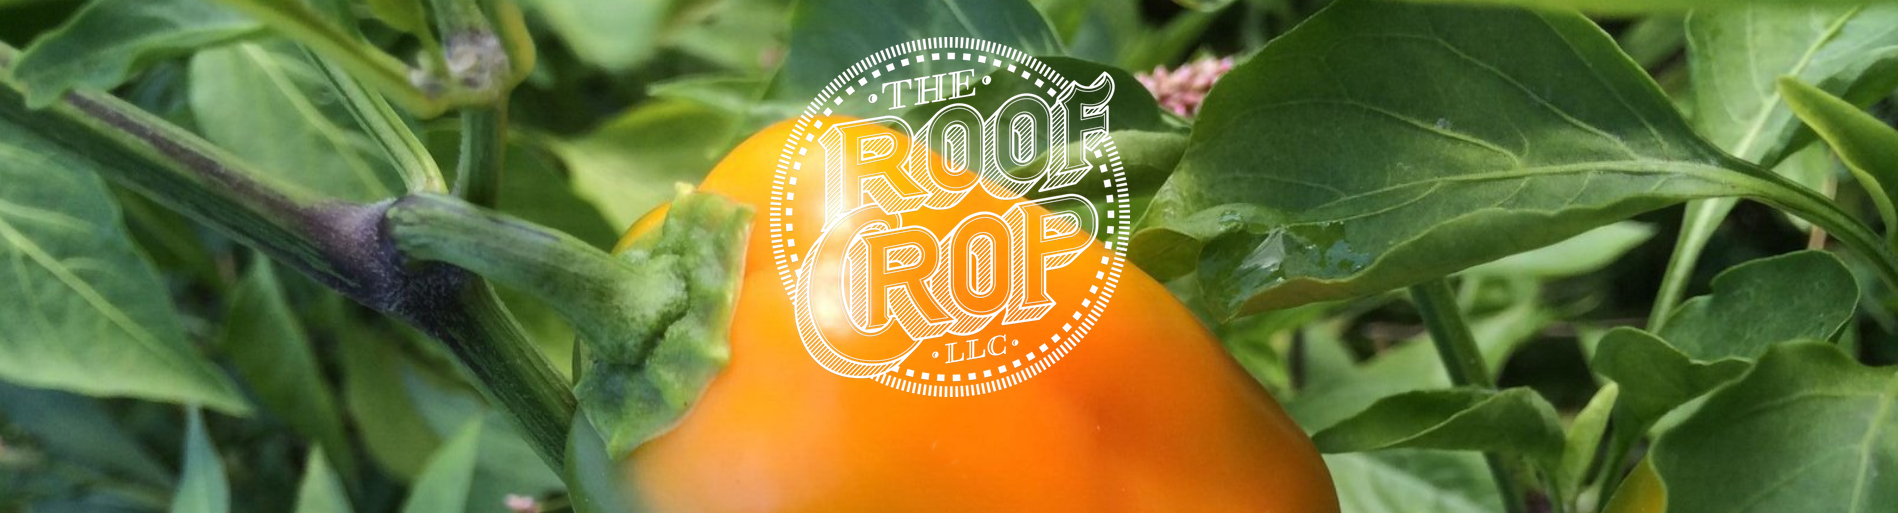 Roof Crop Farm Image